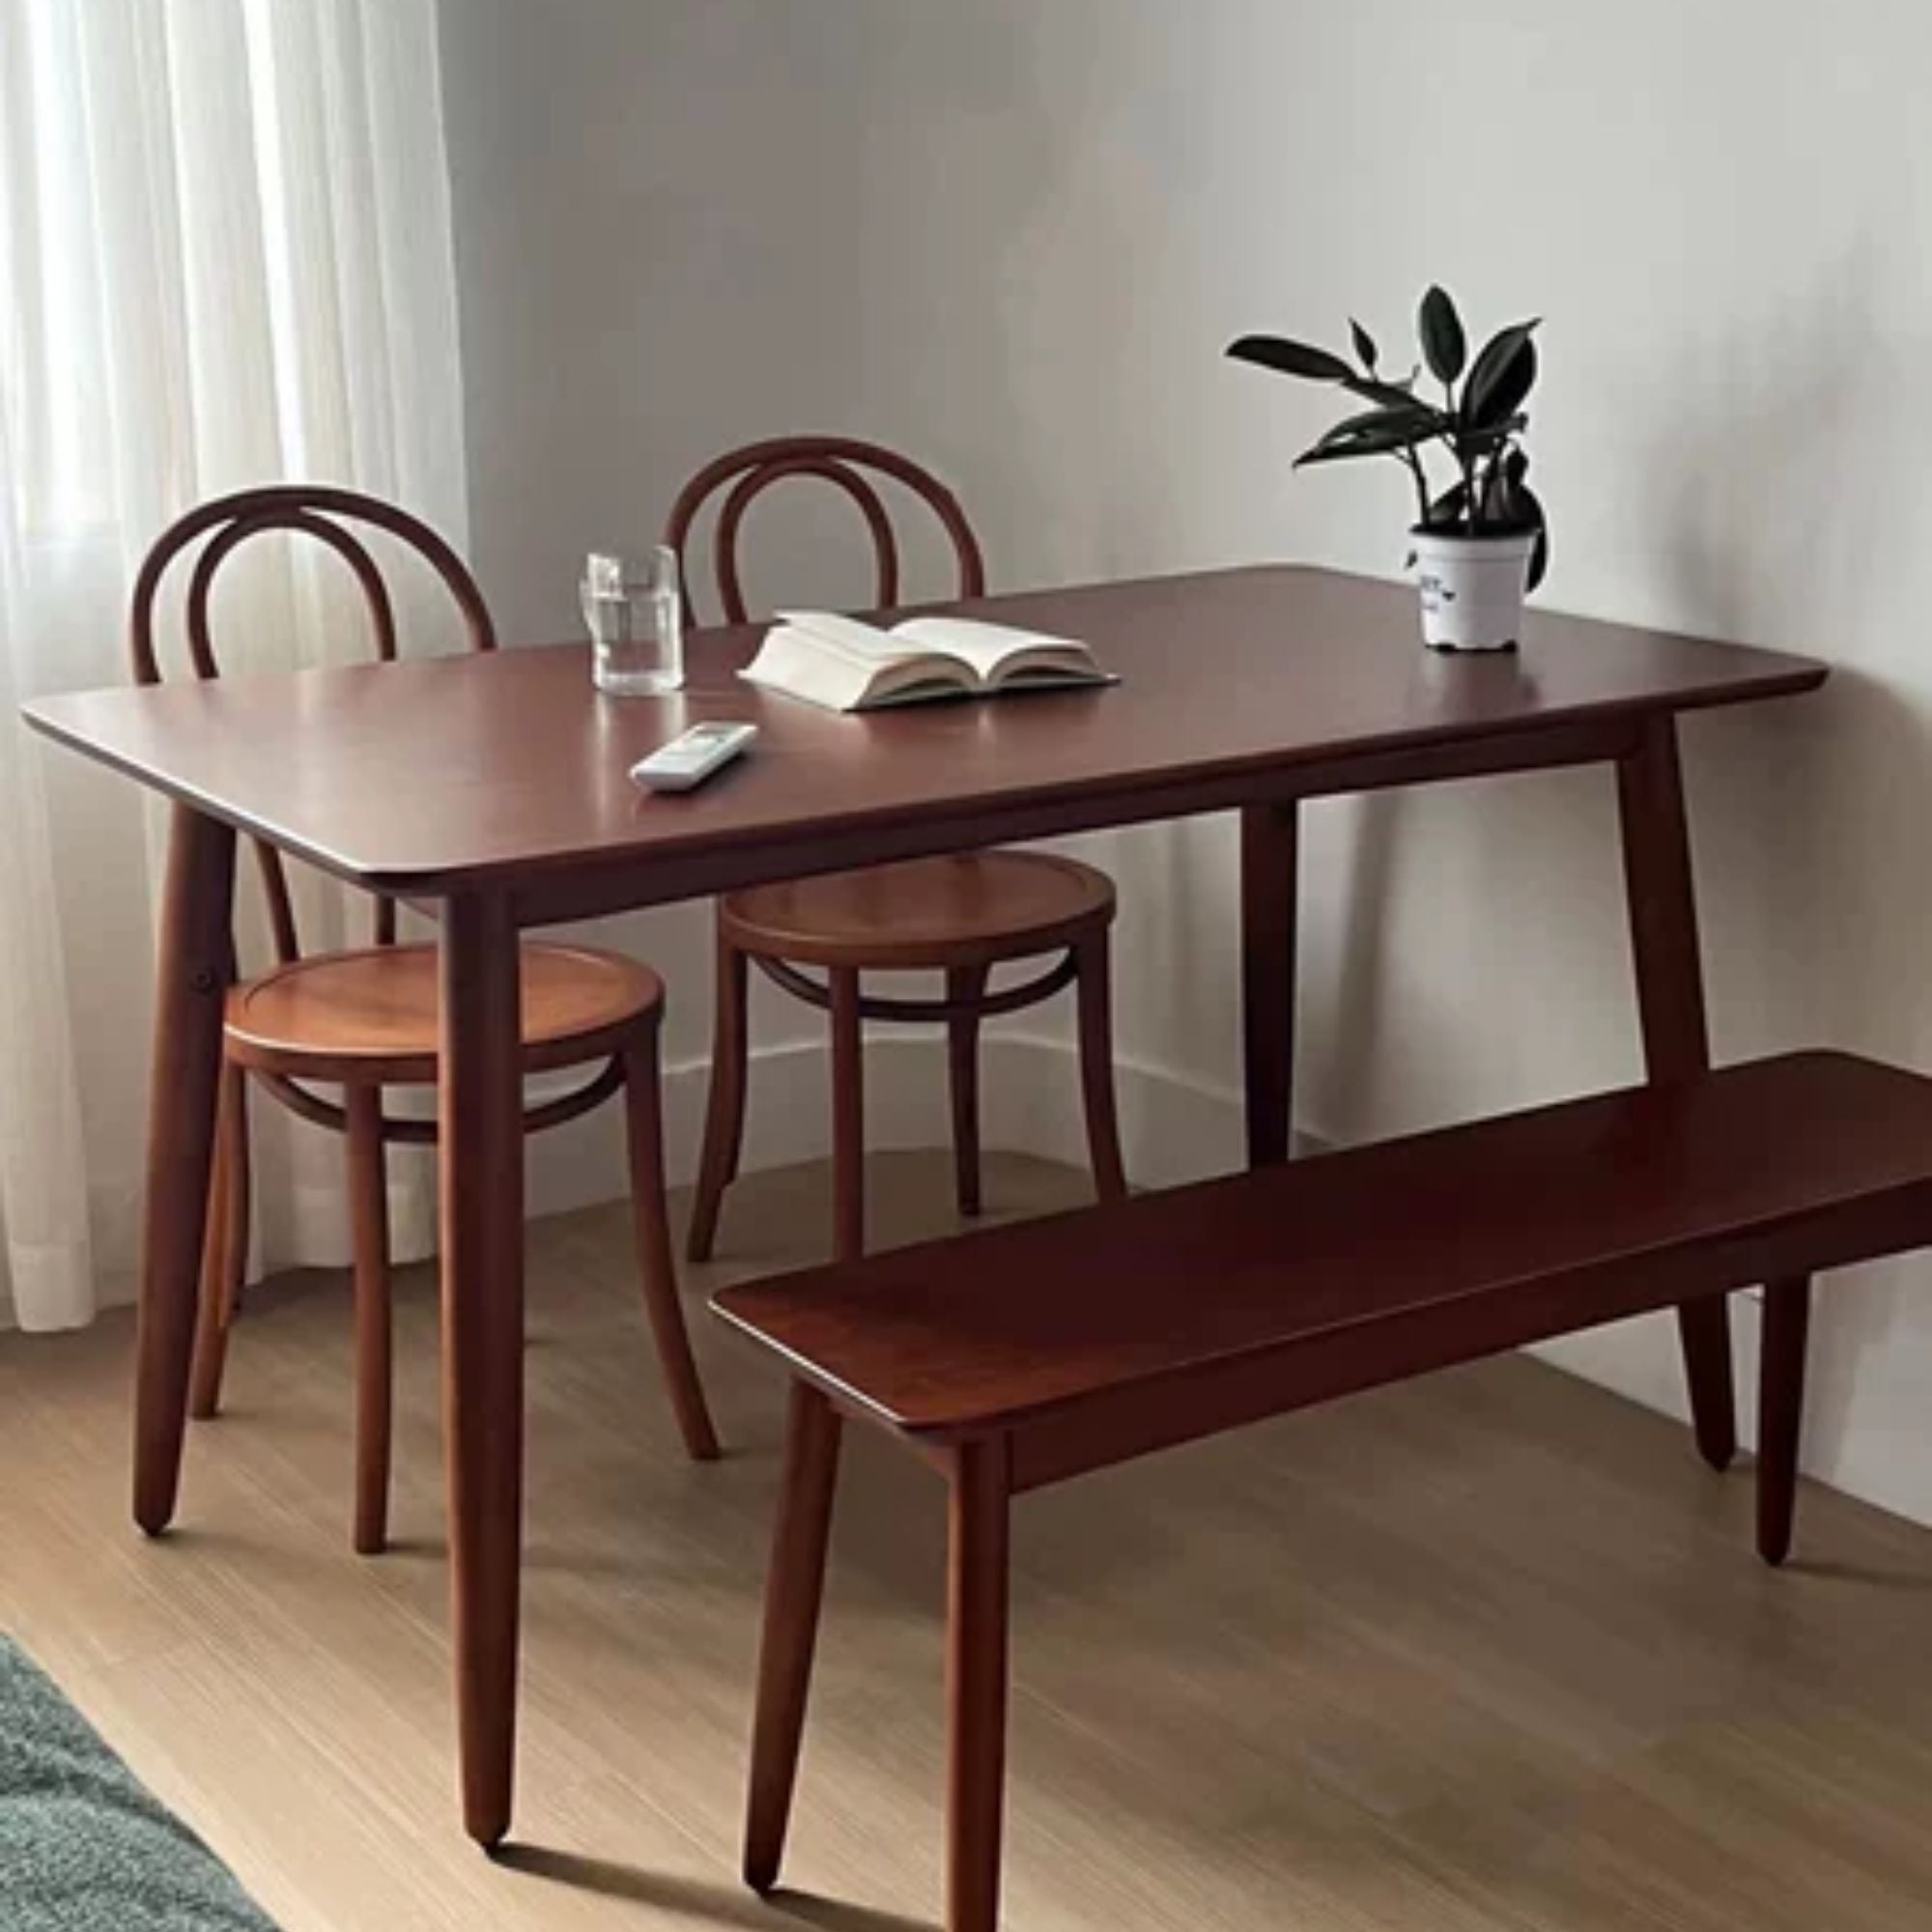 Tranquil poplar wood table dining set